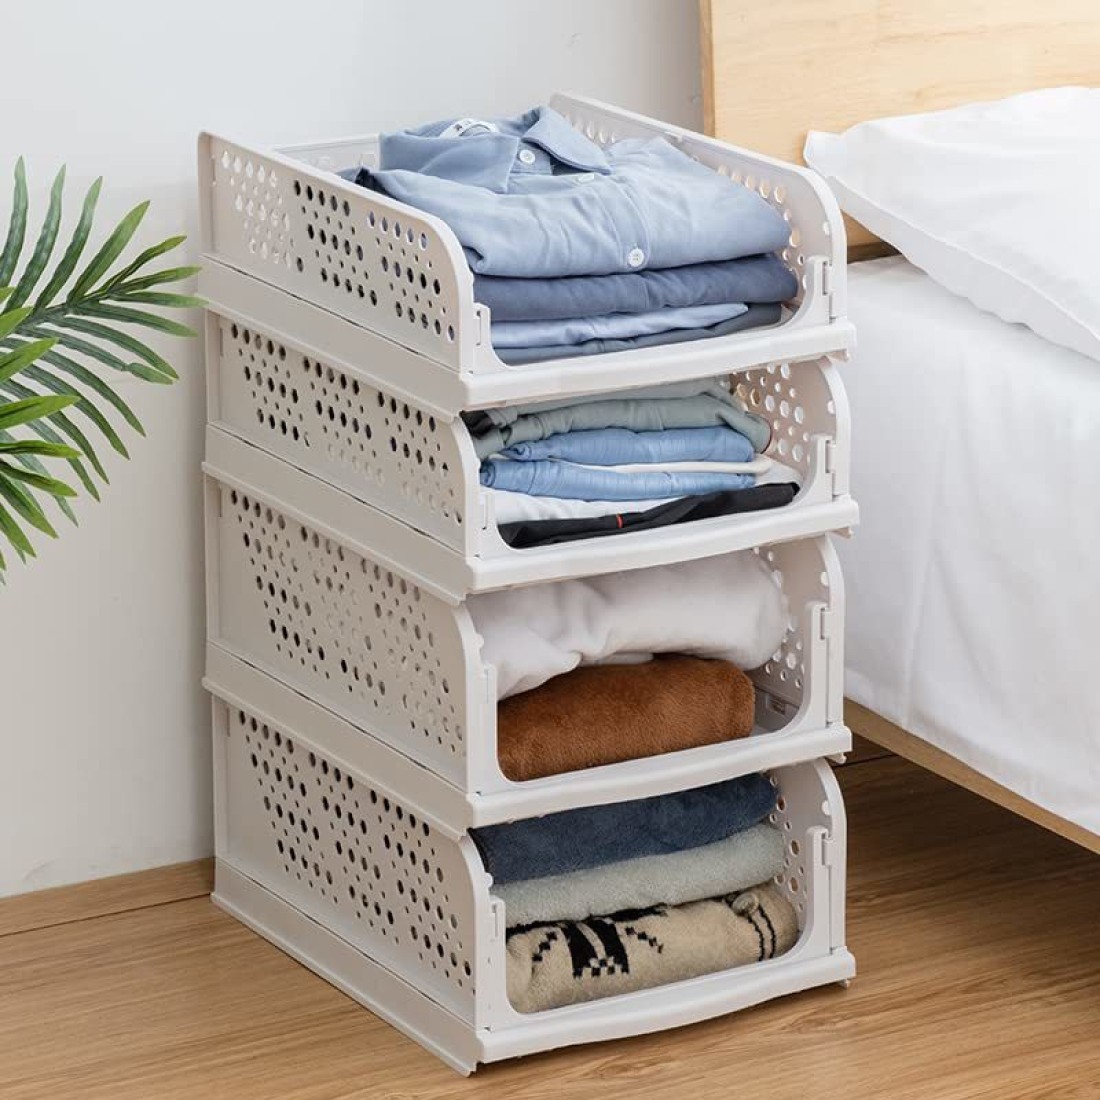 Yoillione Plastic Wardrobe Storage Organiser Wardrobe Closet Storage,White  Wardrobe Organiser …